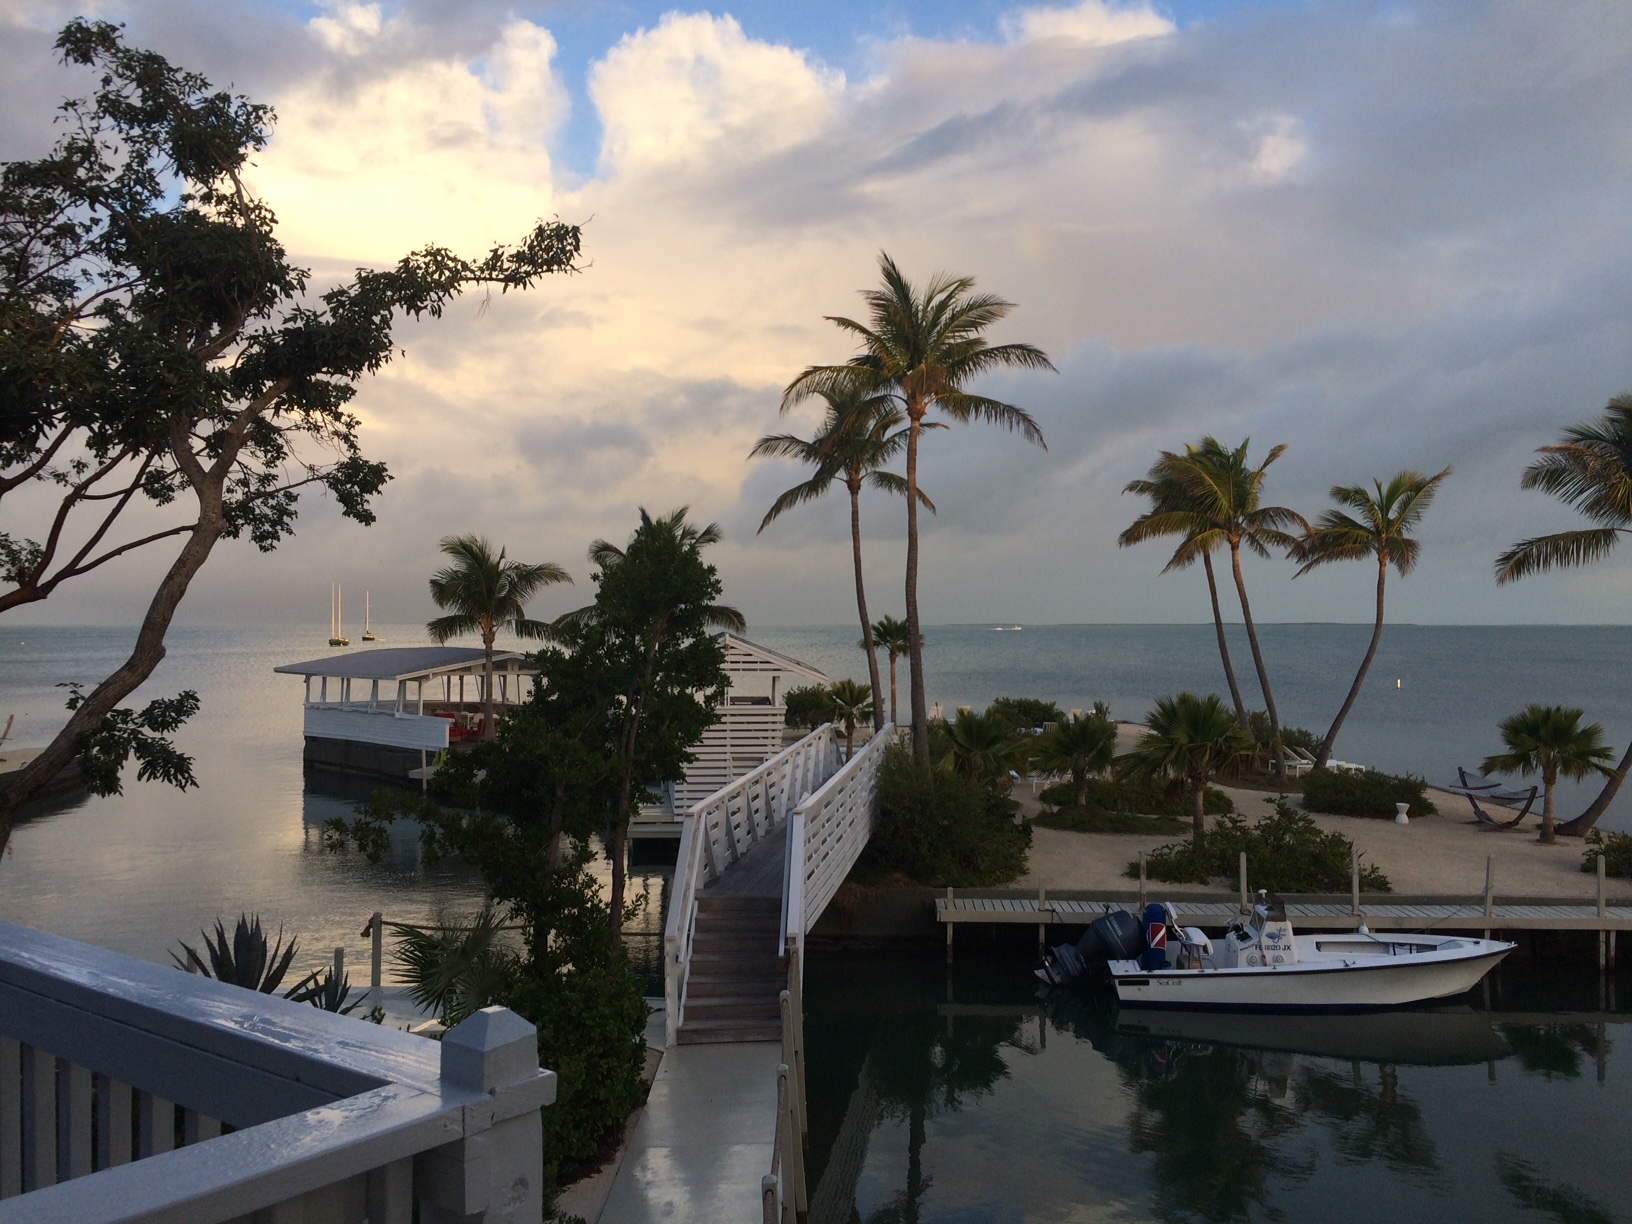 Good Morning from the Florida Keys1632 x 1224